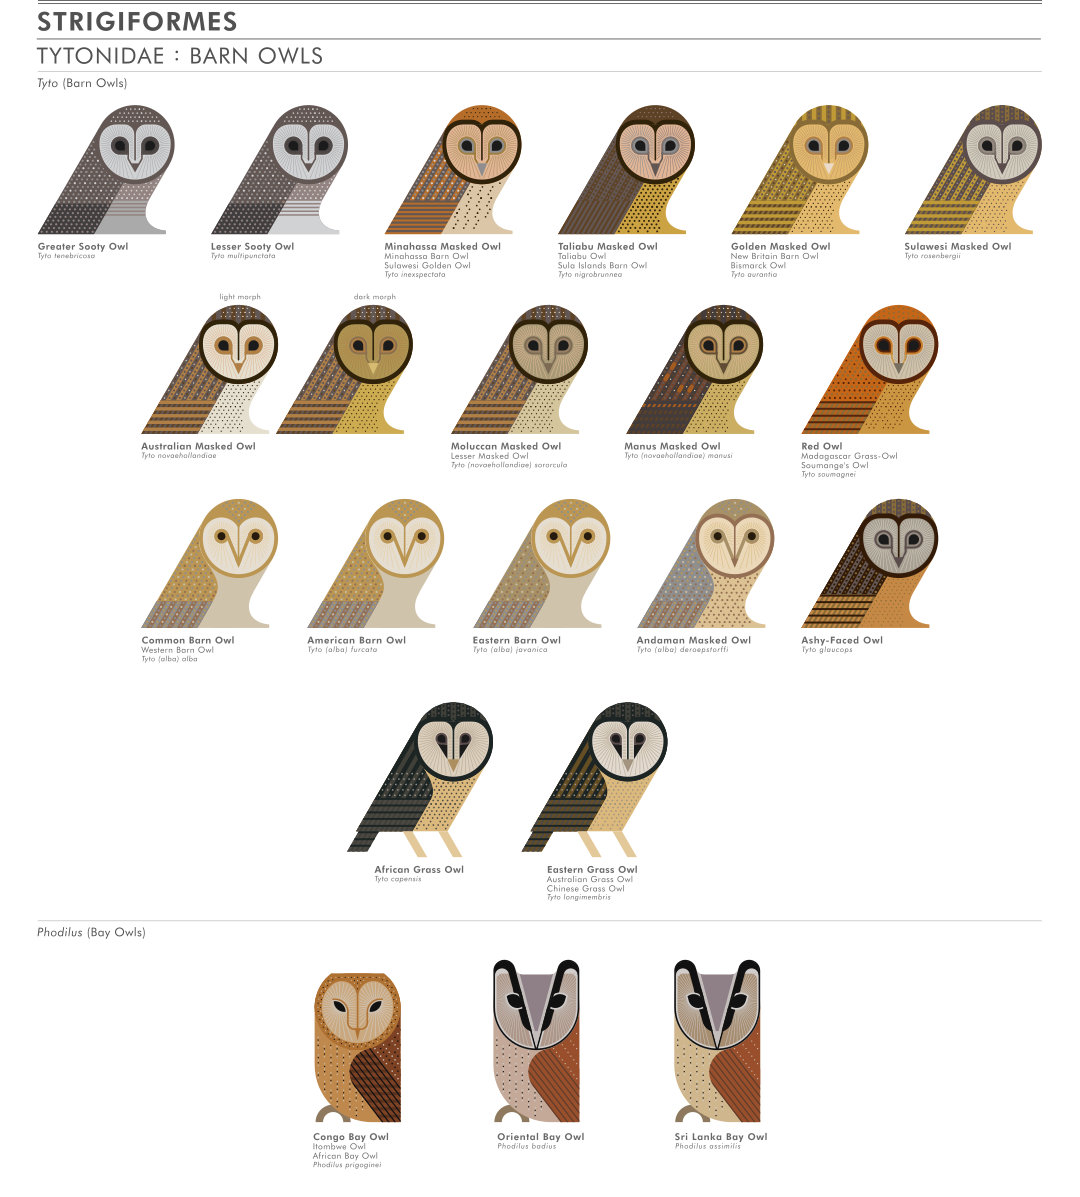 scott partridge - ave - avian vector encyclopedia - barn owls tytonidae